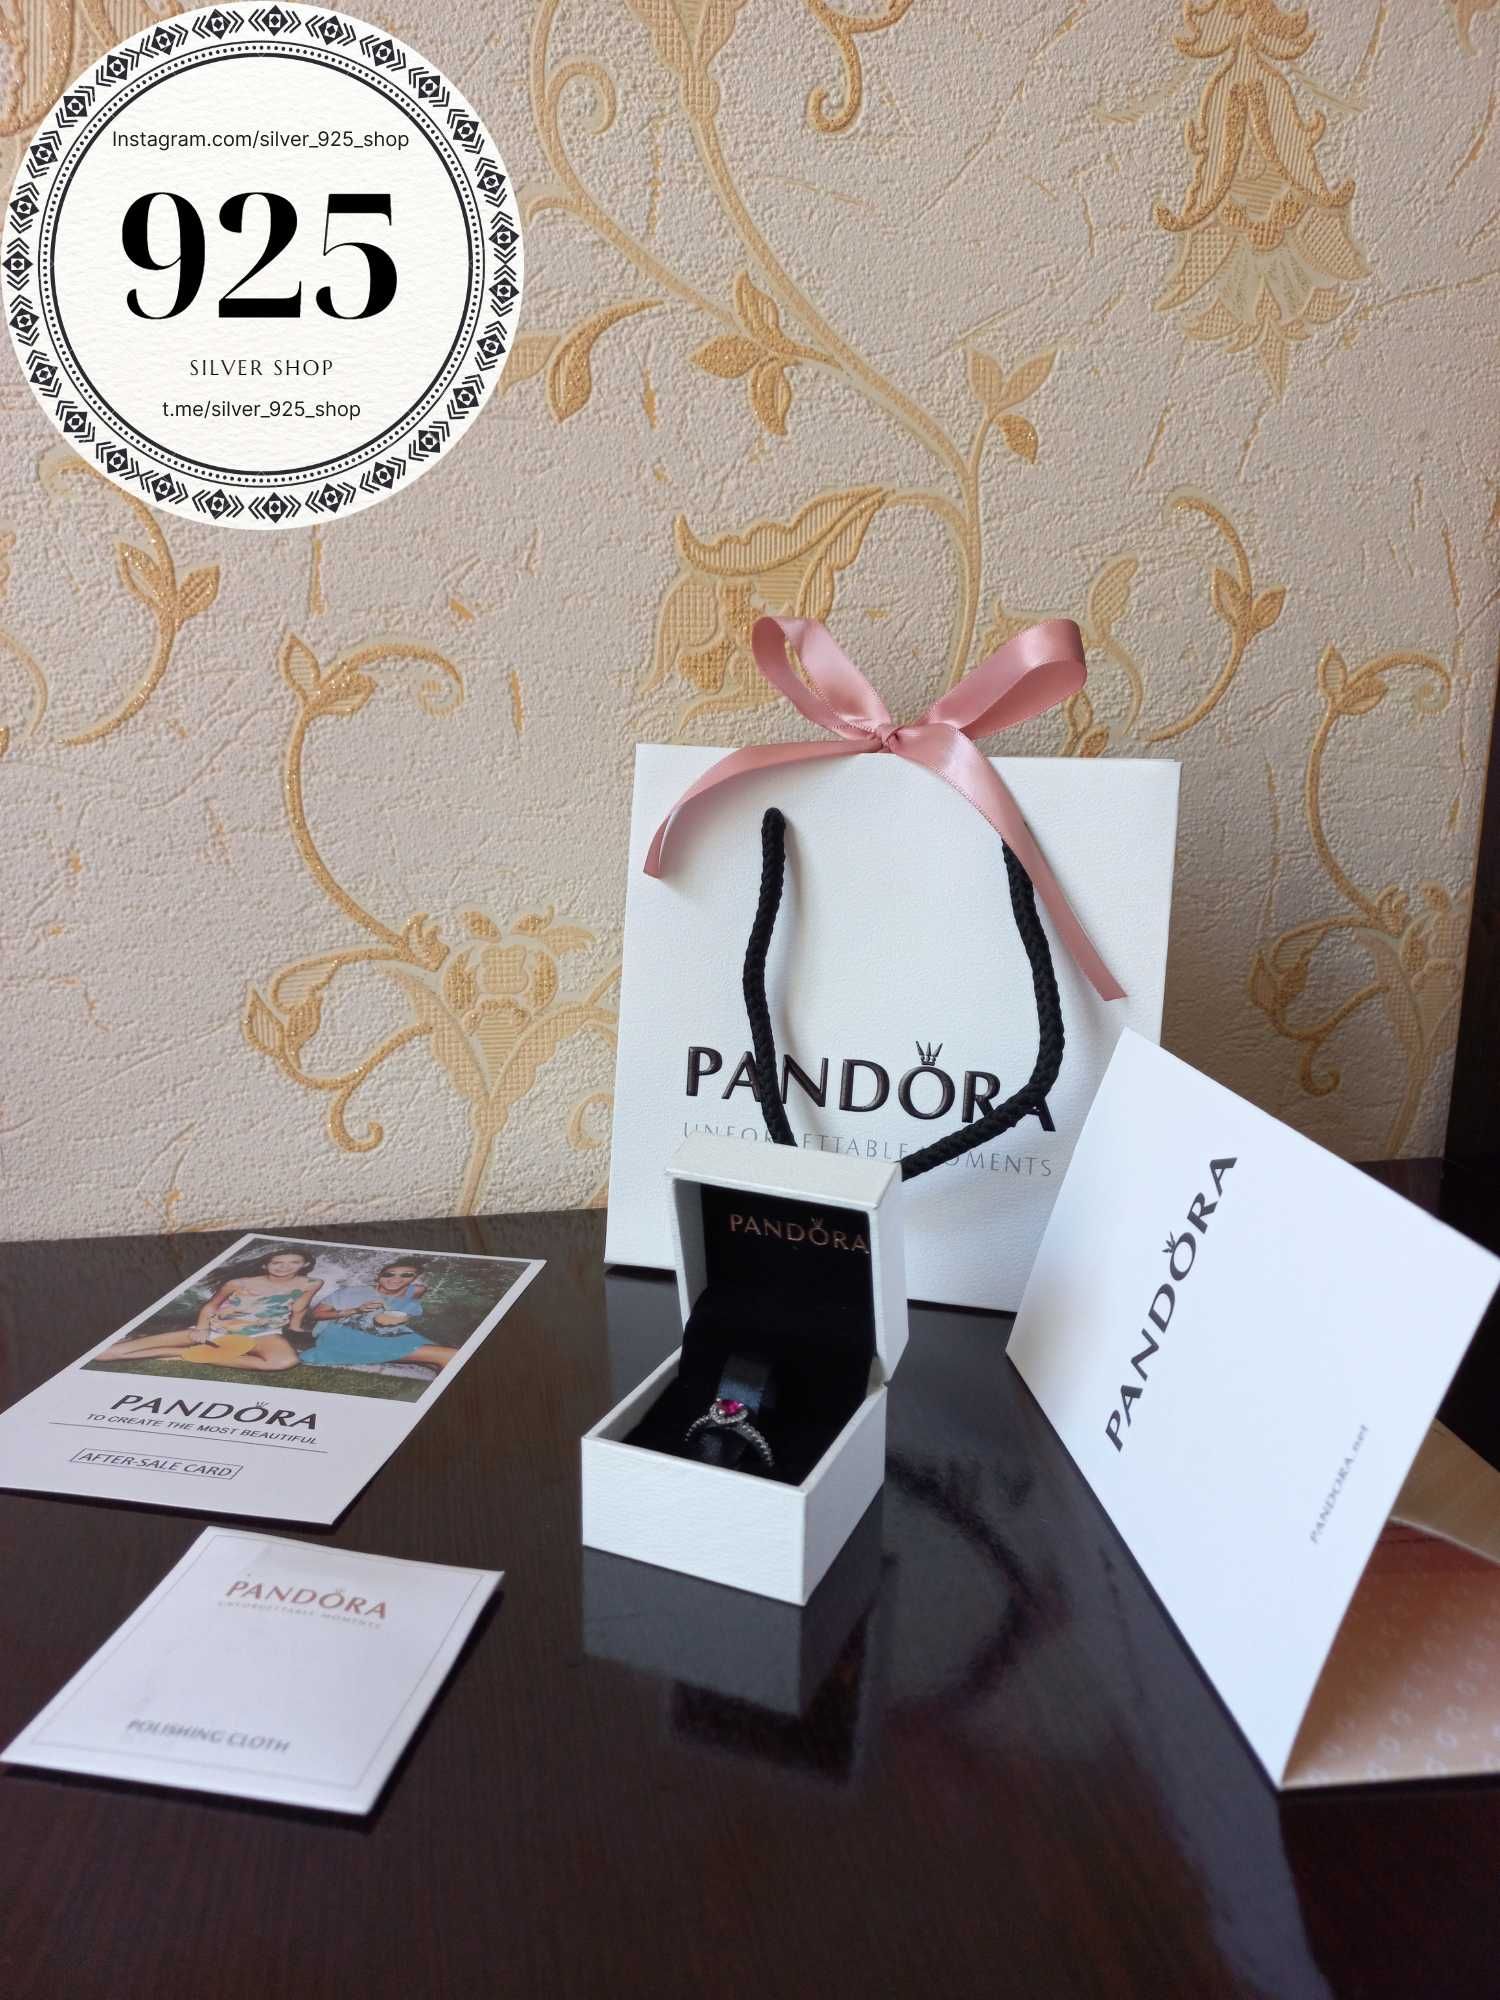 Серебряное кольцо от Pandora | Pandora брендидан кумуш узук